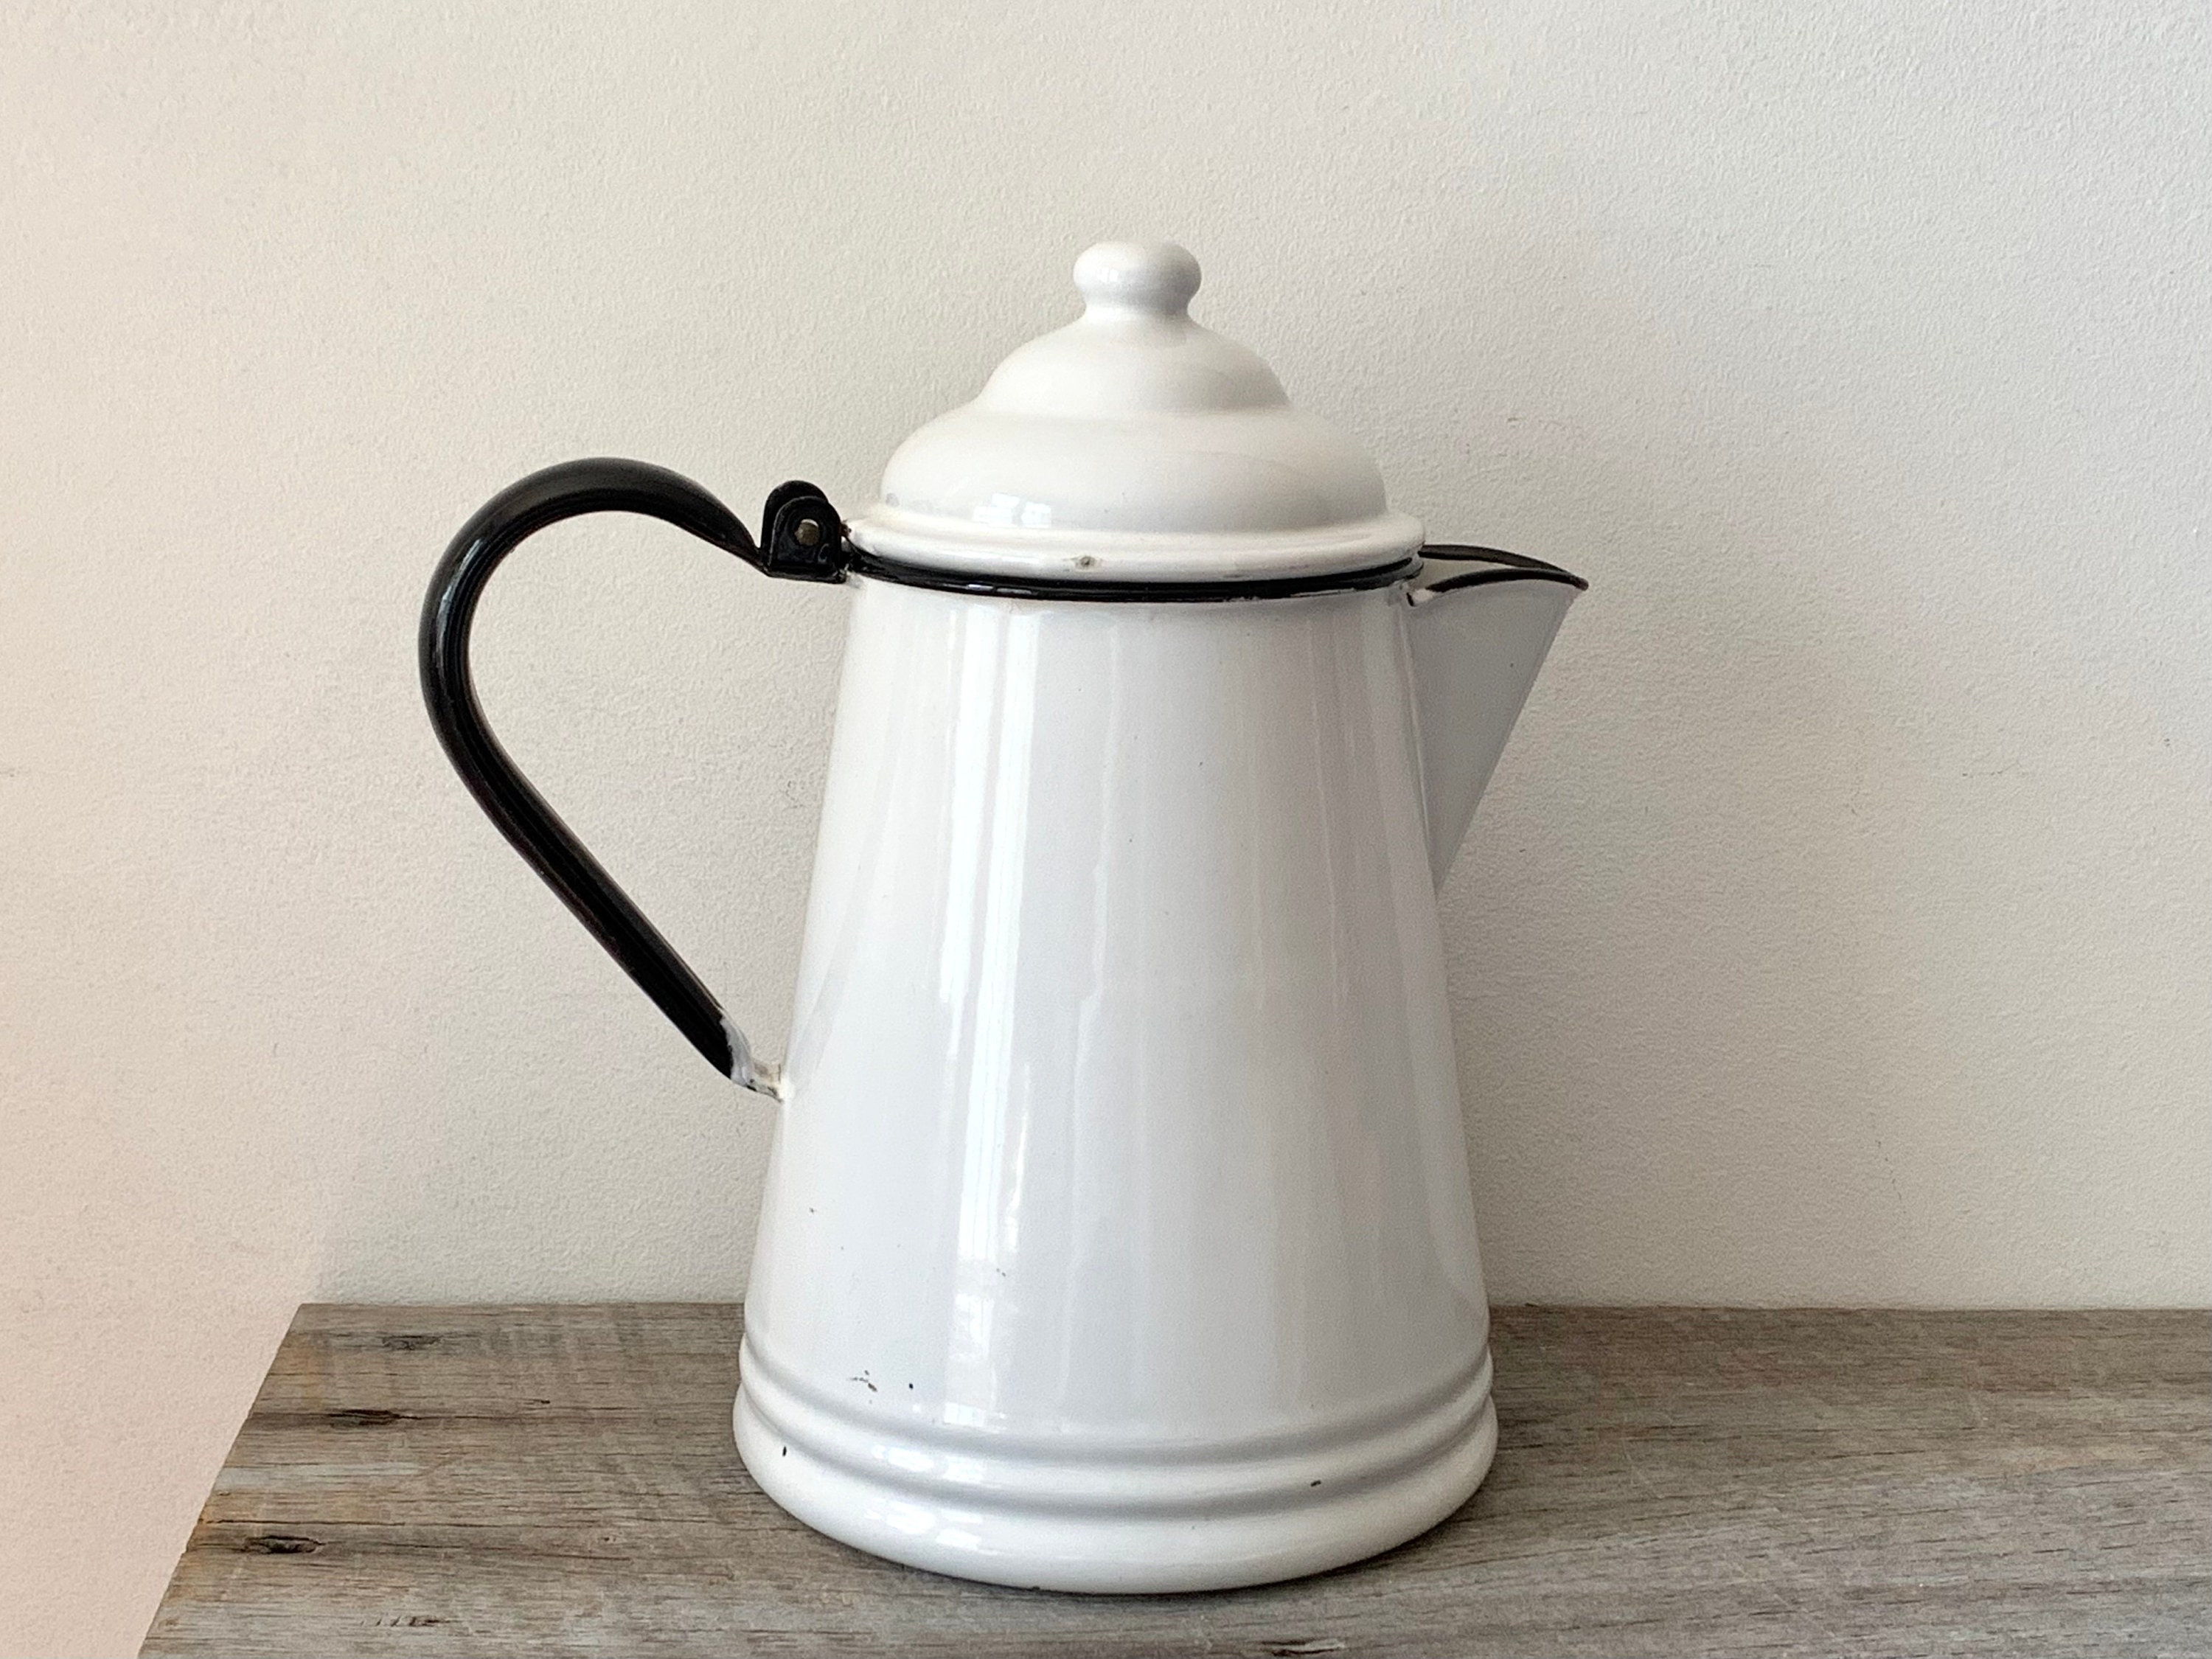 Sold at Auction: White Enamel Cowboy Coffee Pot